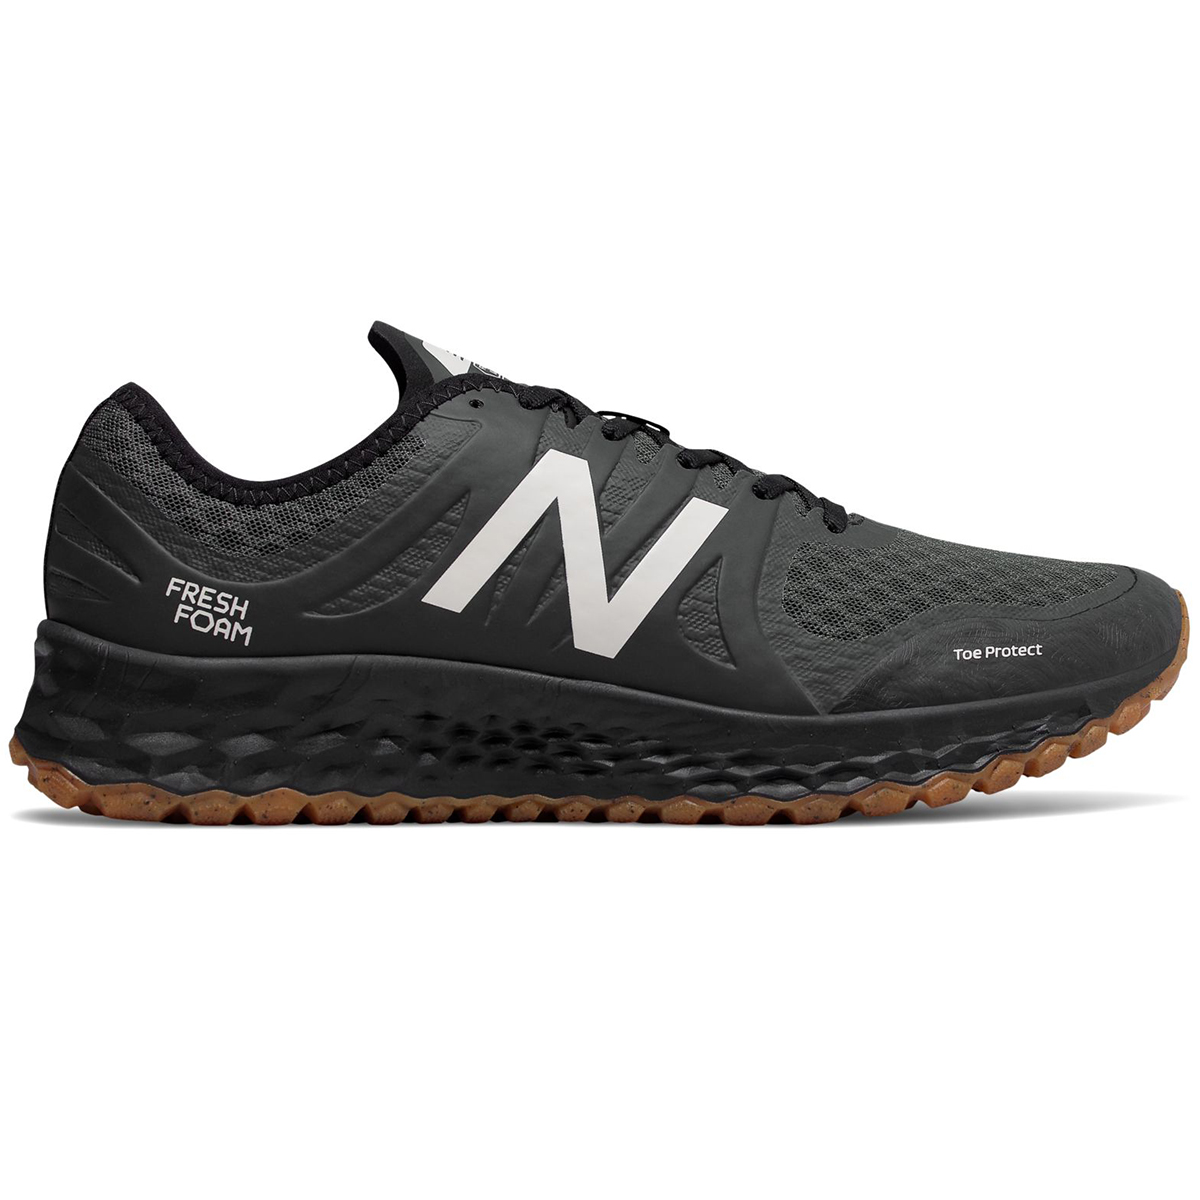 New Balance Men's Fresh Foam Kaymin Trl Trail Running Shoes - Black, 8